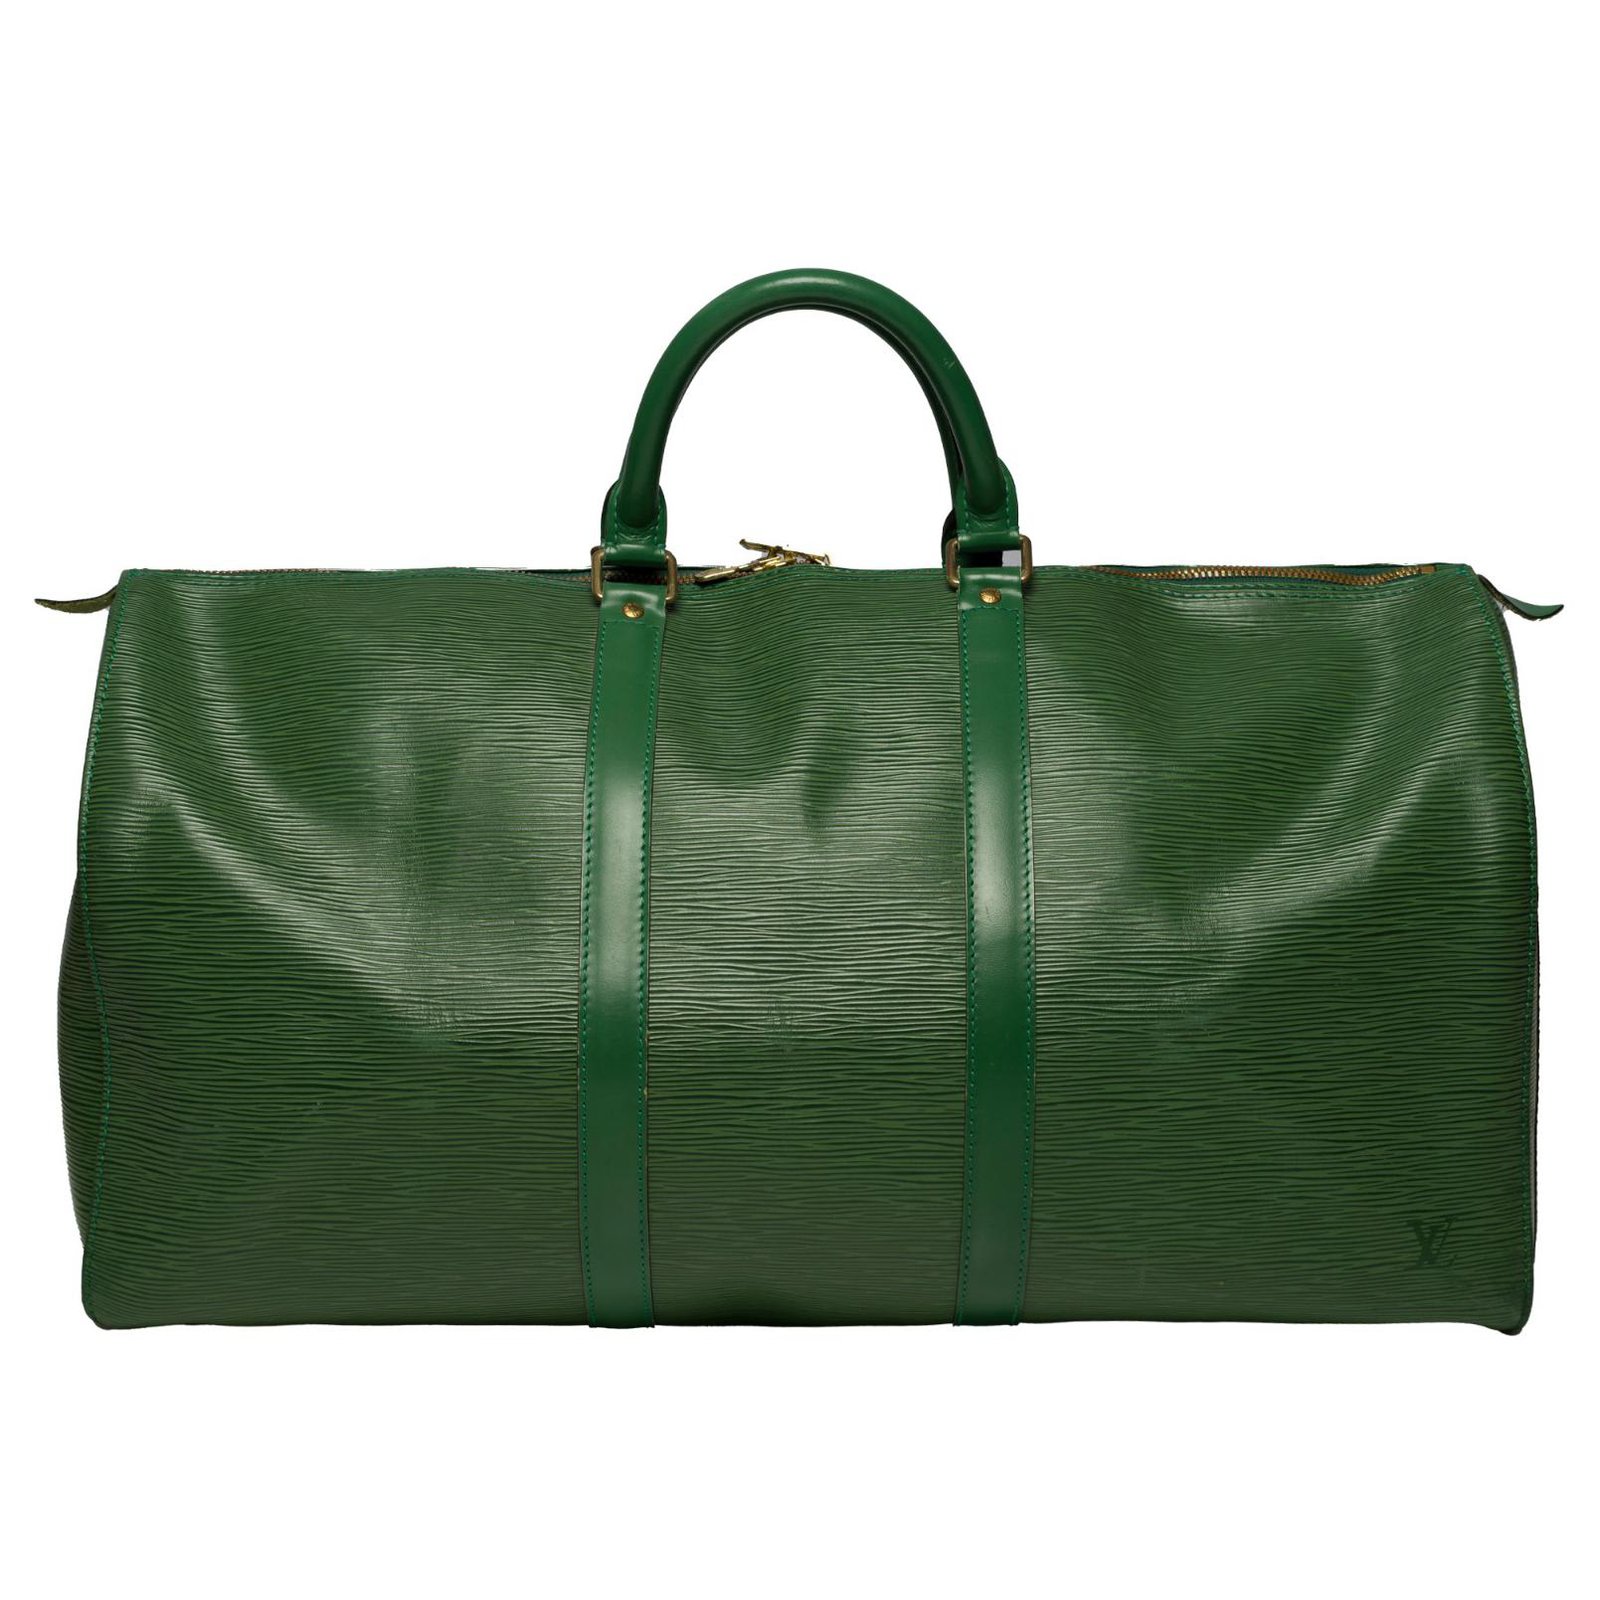 Very beautiful Louis Vuitton Keepall travel bag 50 in green epi